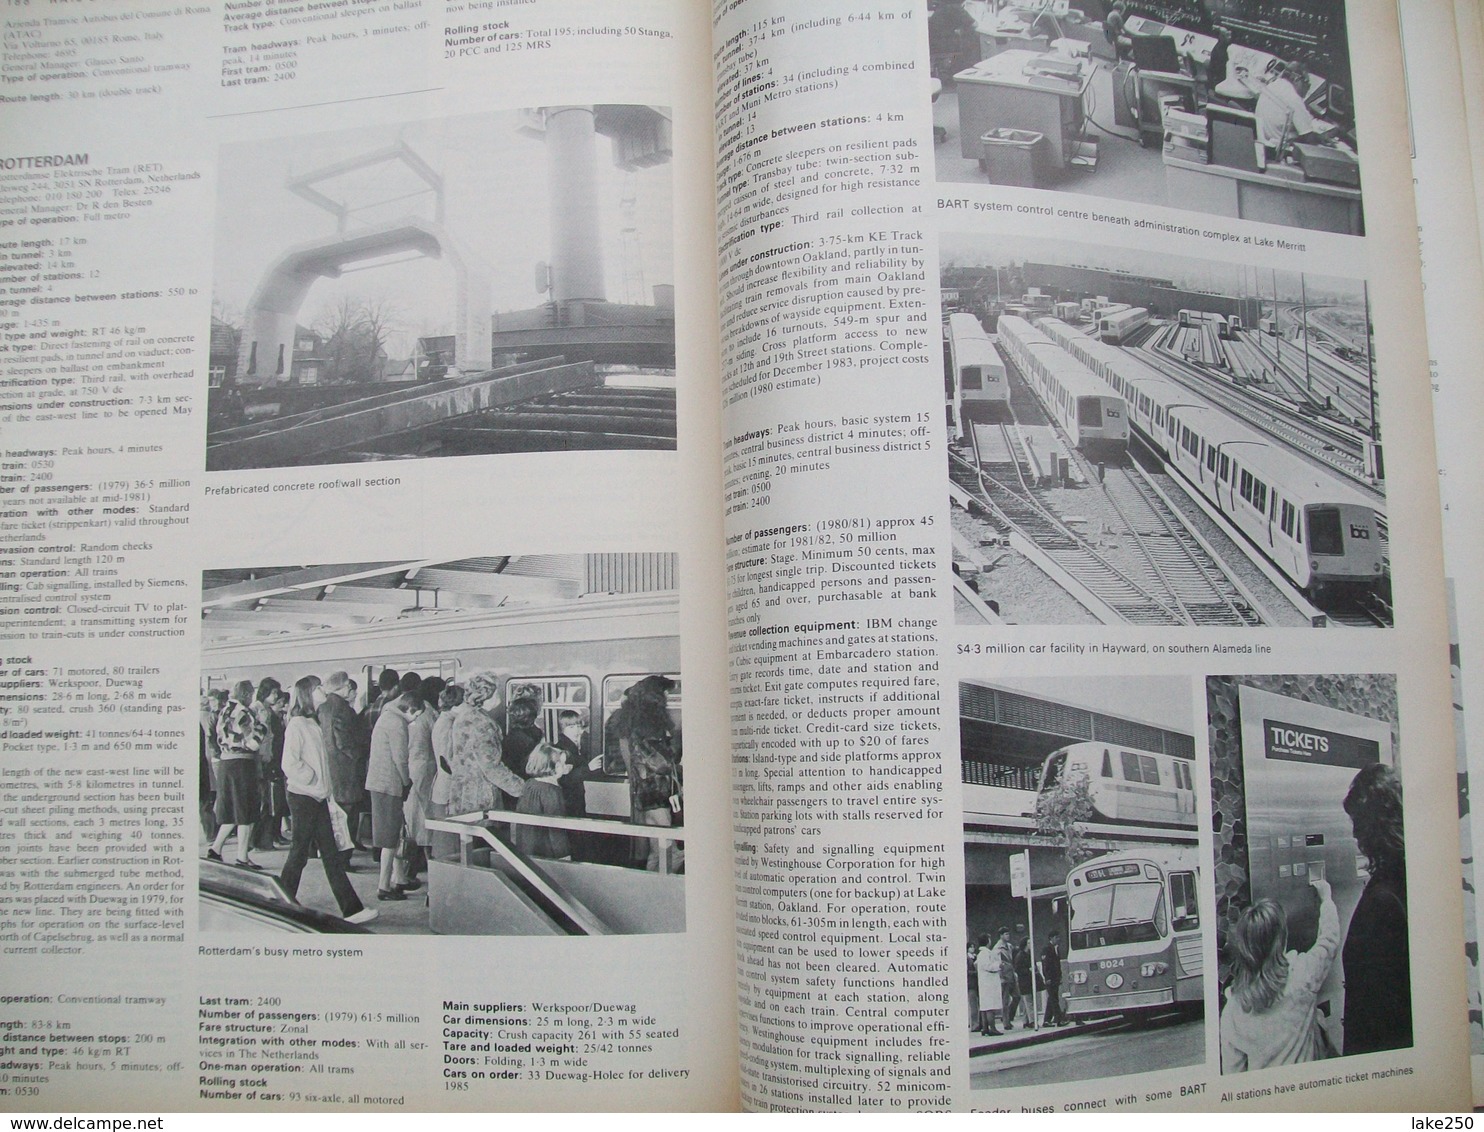 JANE'S URBAN TRANSPORT SYSTEMS 1982 - Transports